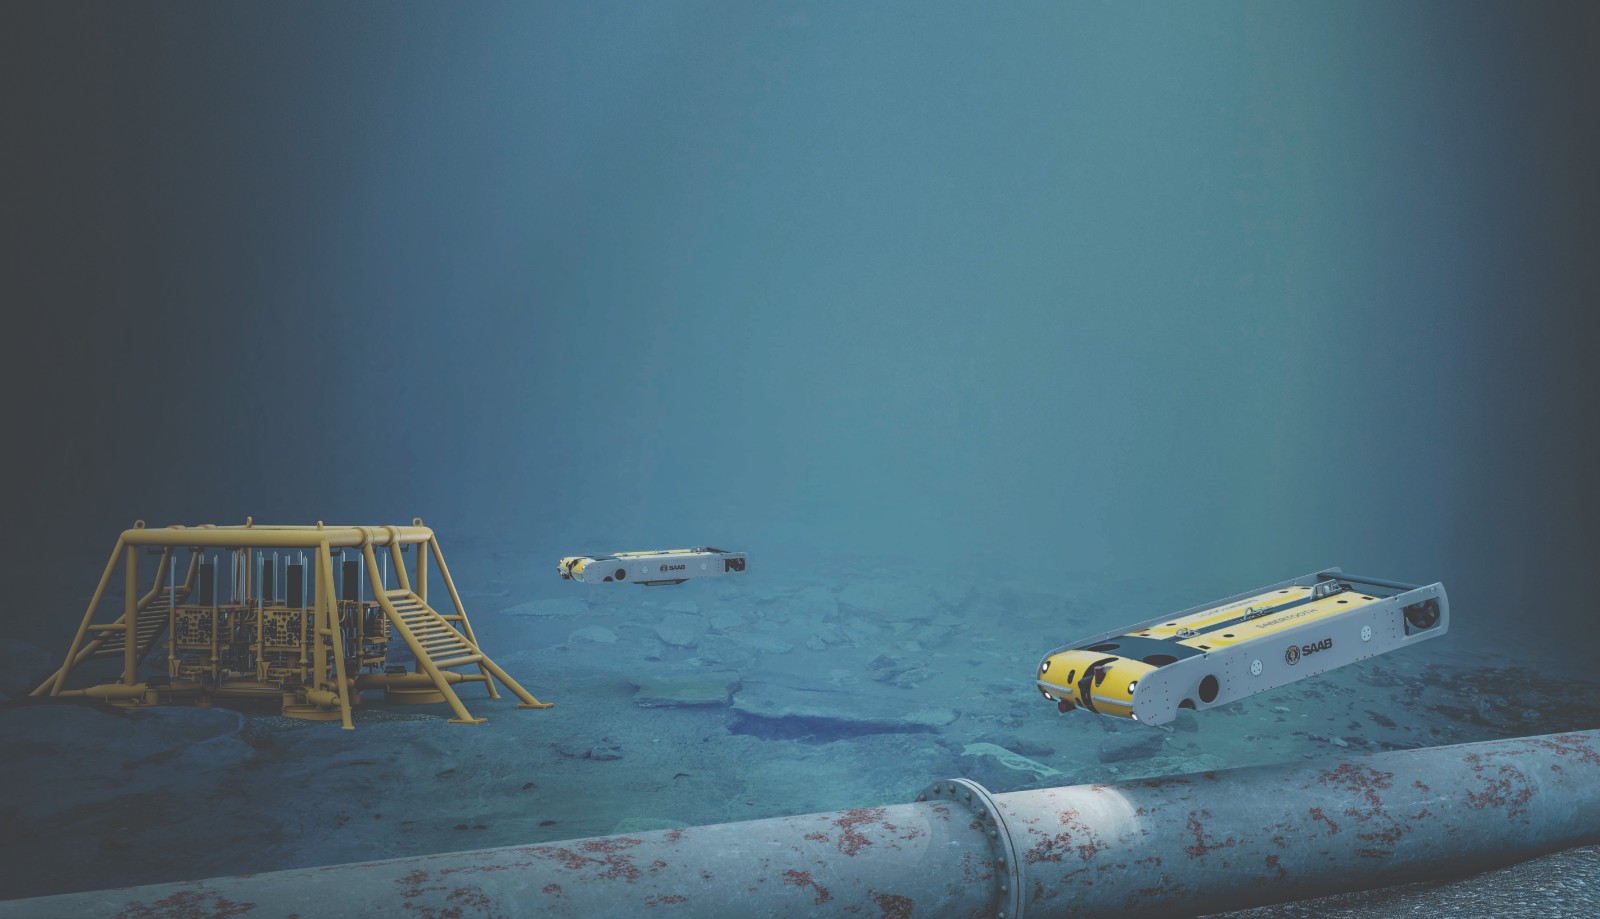 Undervattensfarkosten Sabertooth från SAAB